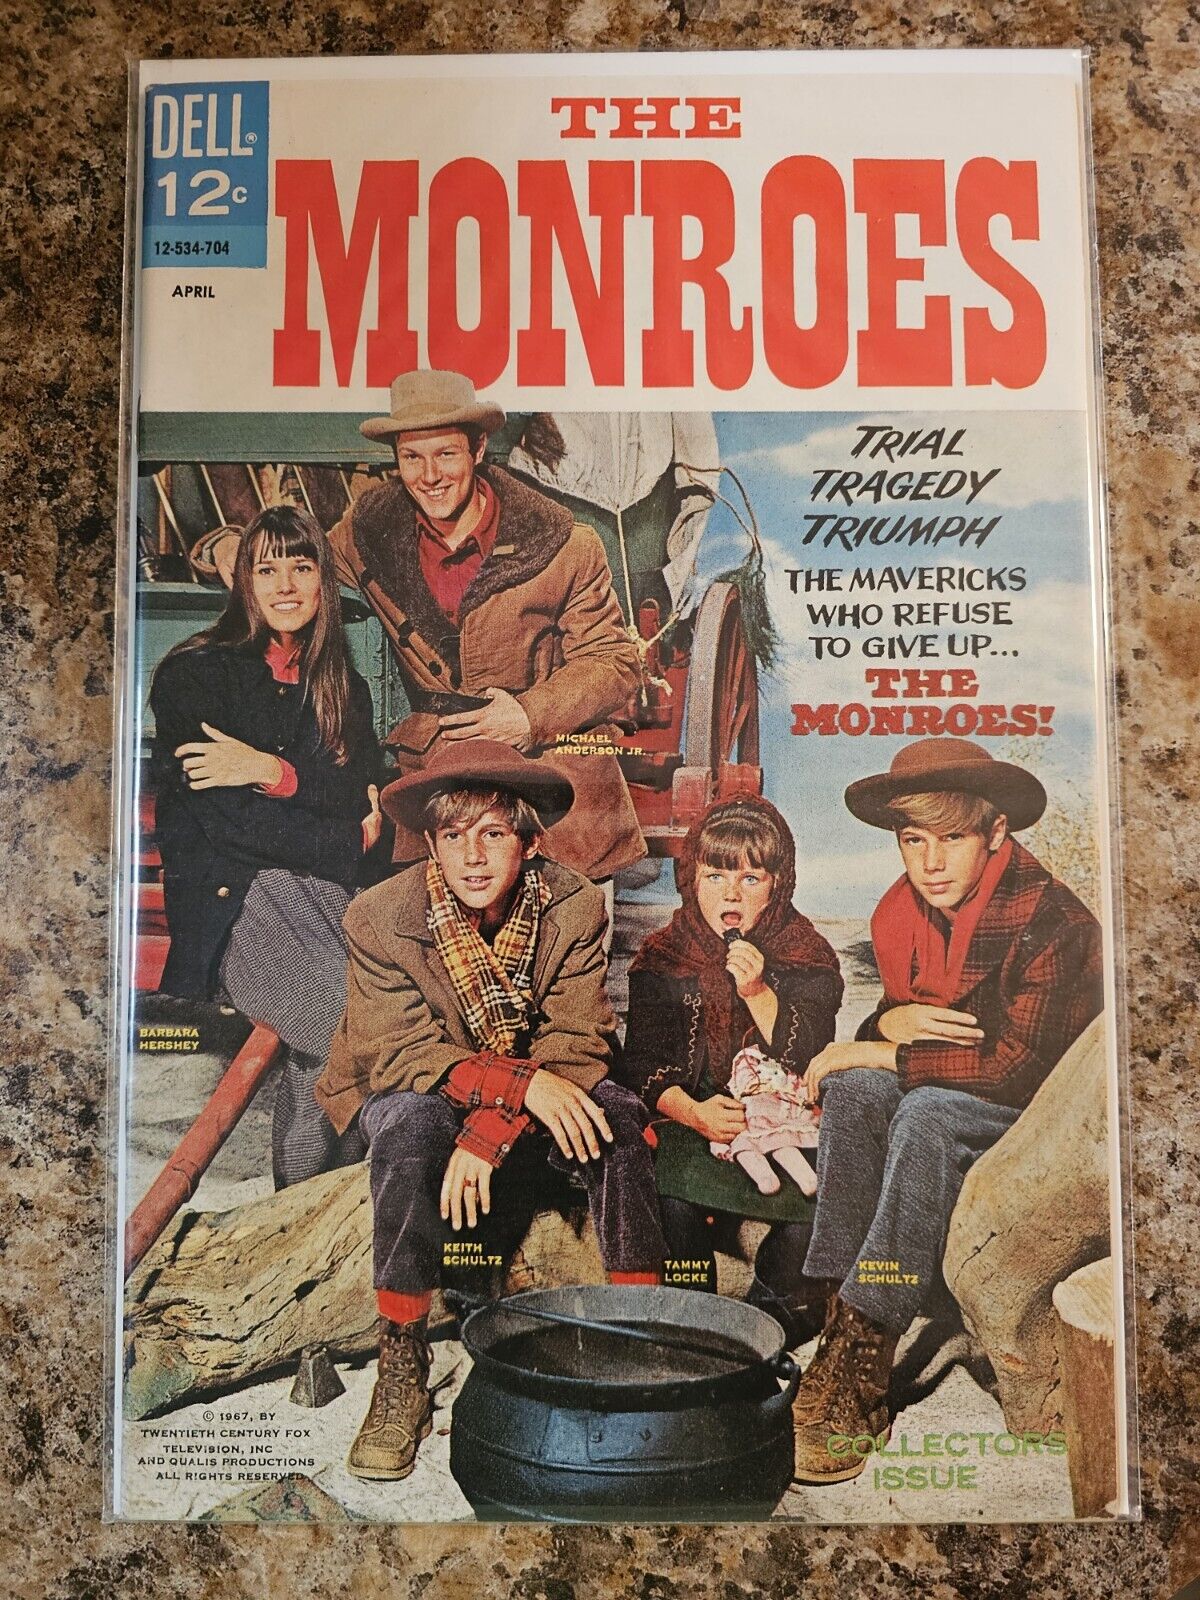 The Monroes #1 (1967) Photo Cover - Silver Age Dell Comics VF+